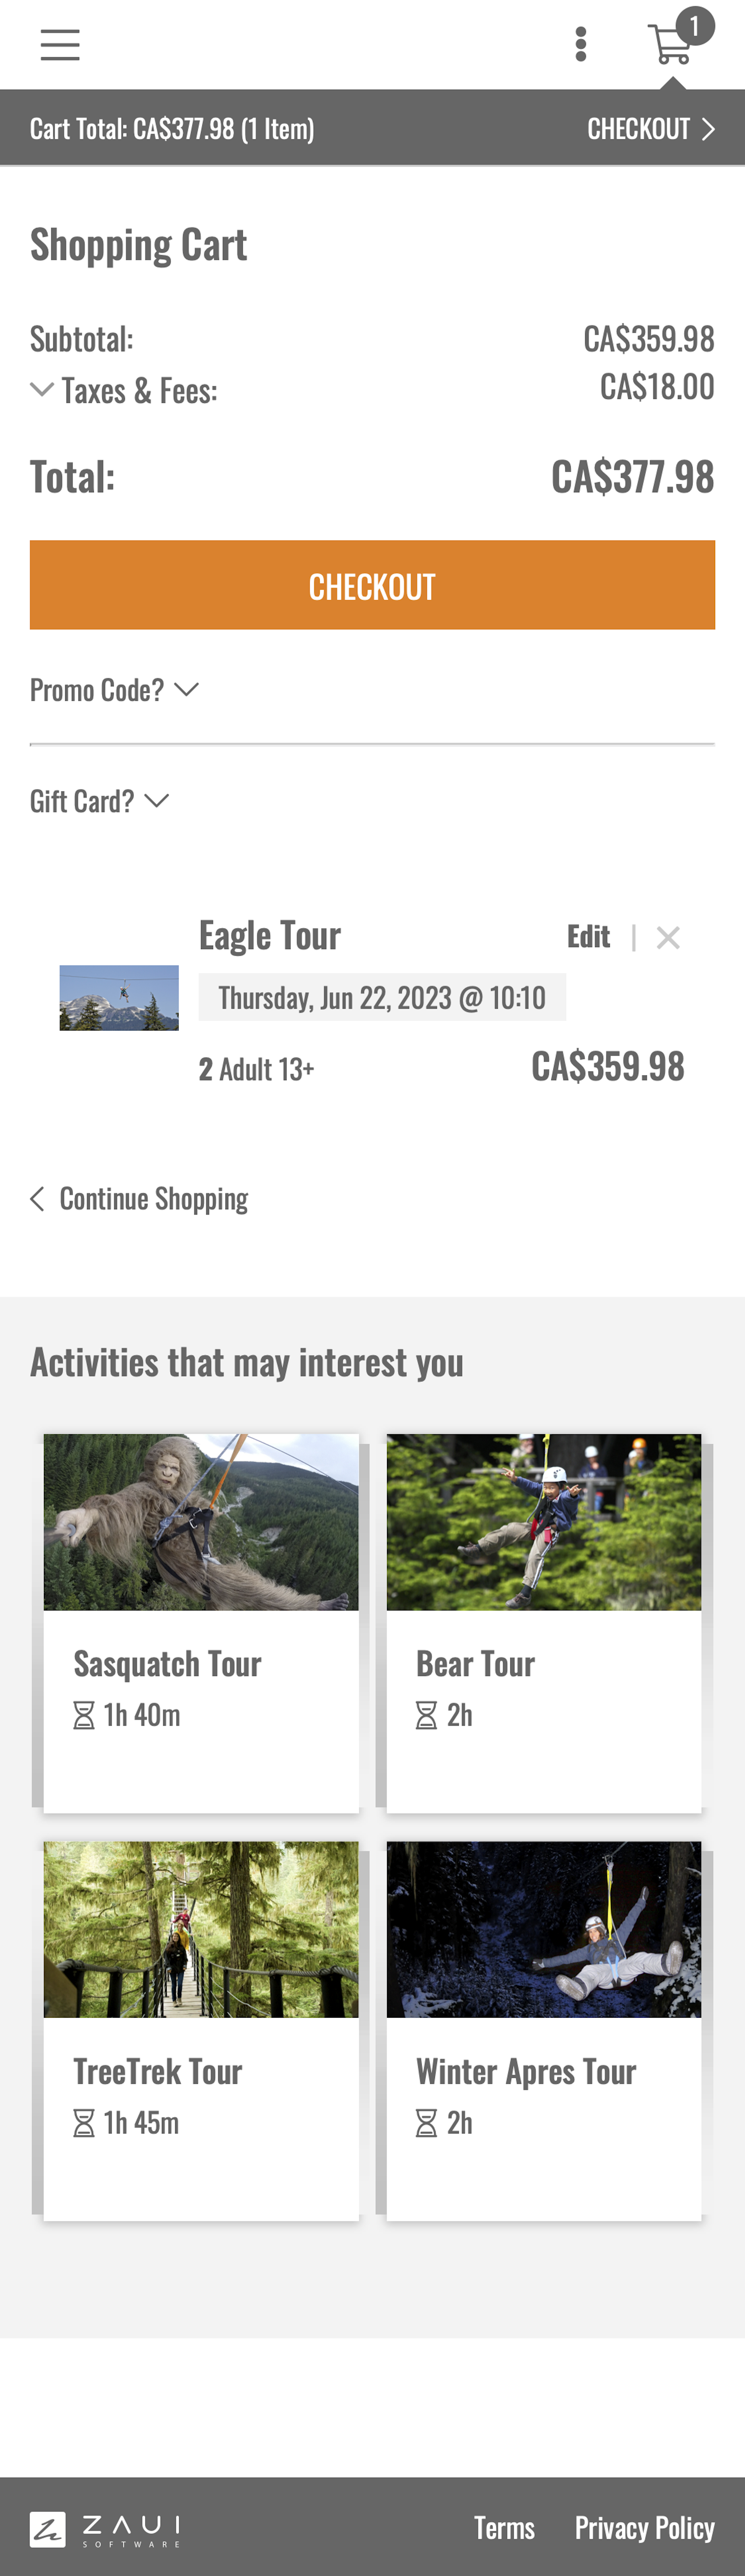 Mobile screenshot of Ziptrek Ecotours